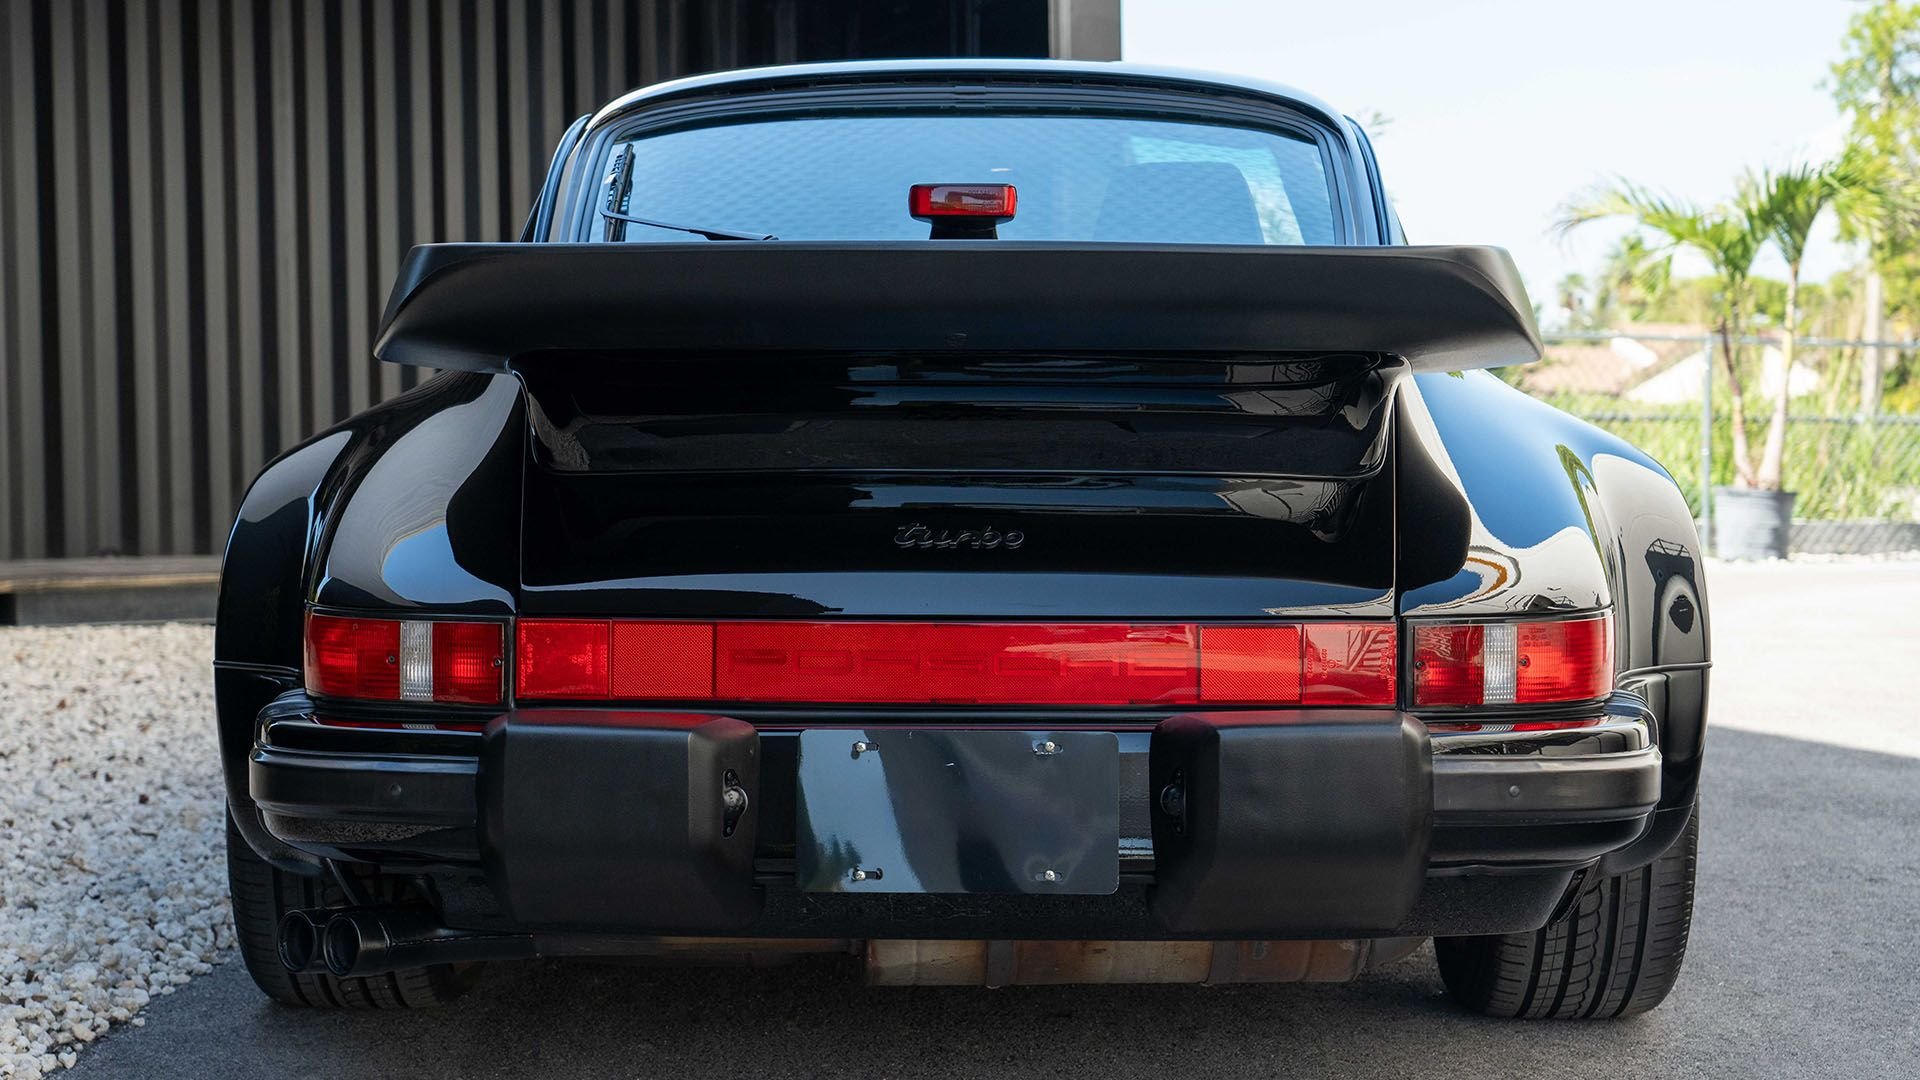 For Sale 1987 Porsche 911 Turbo Coupe